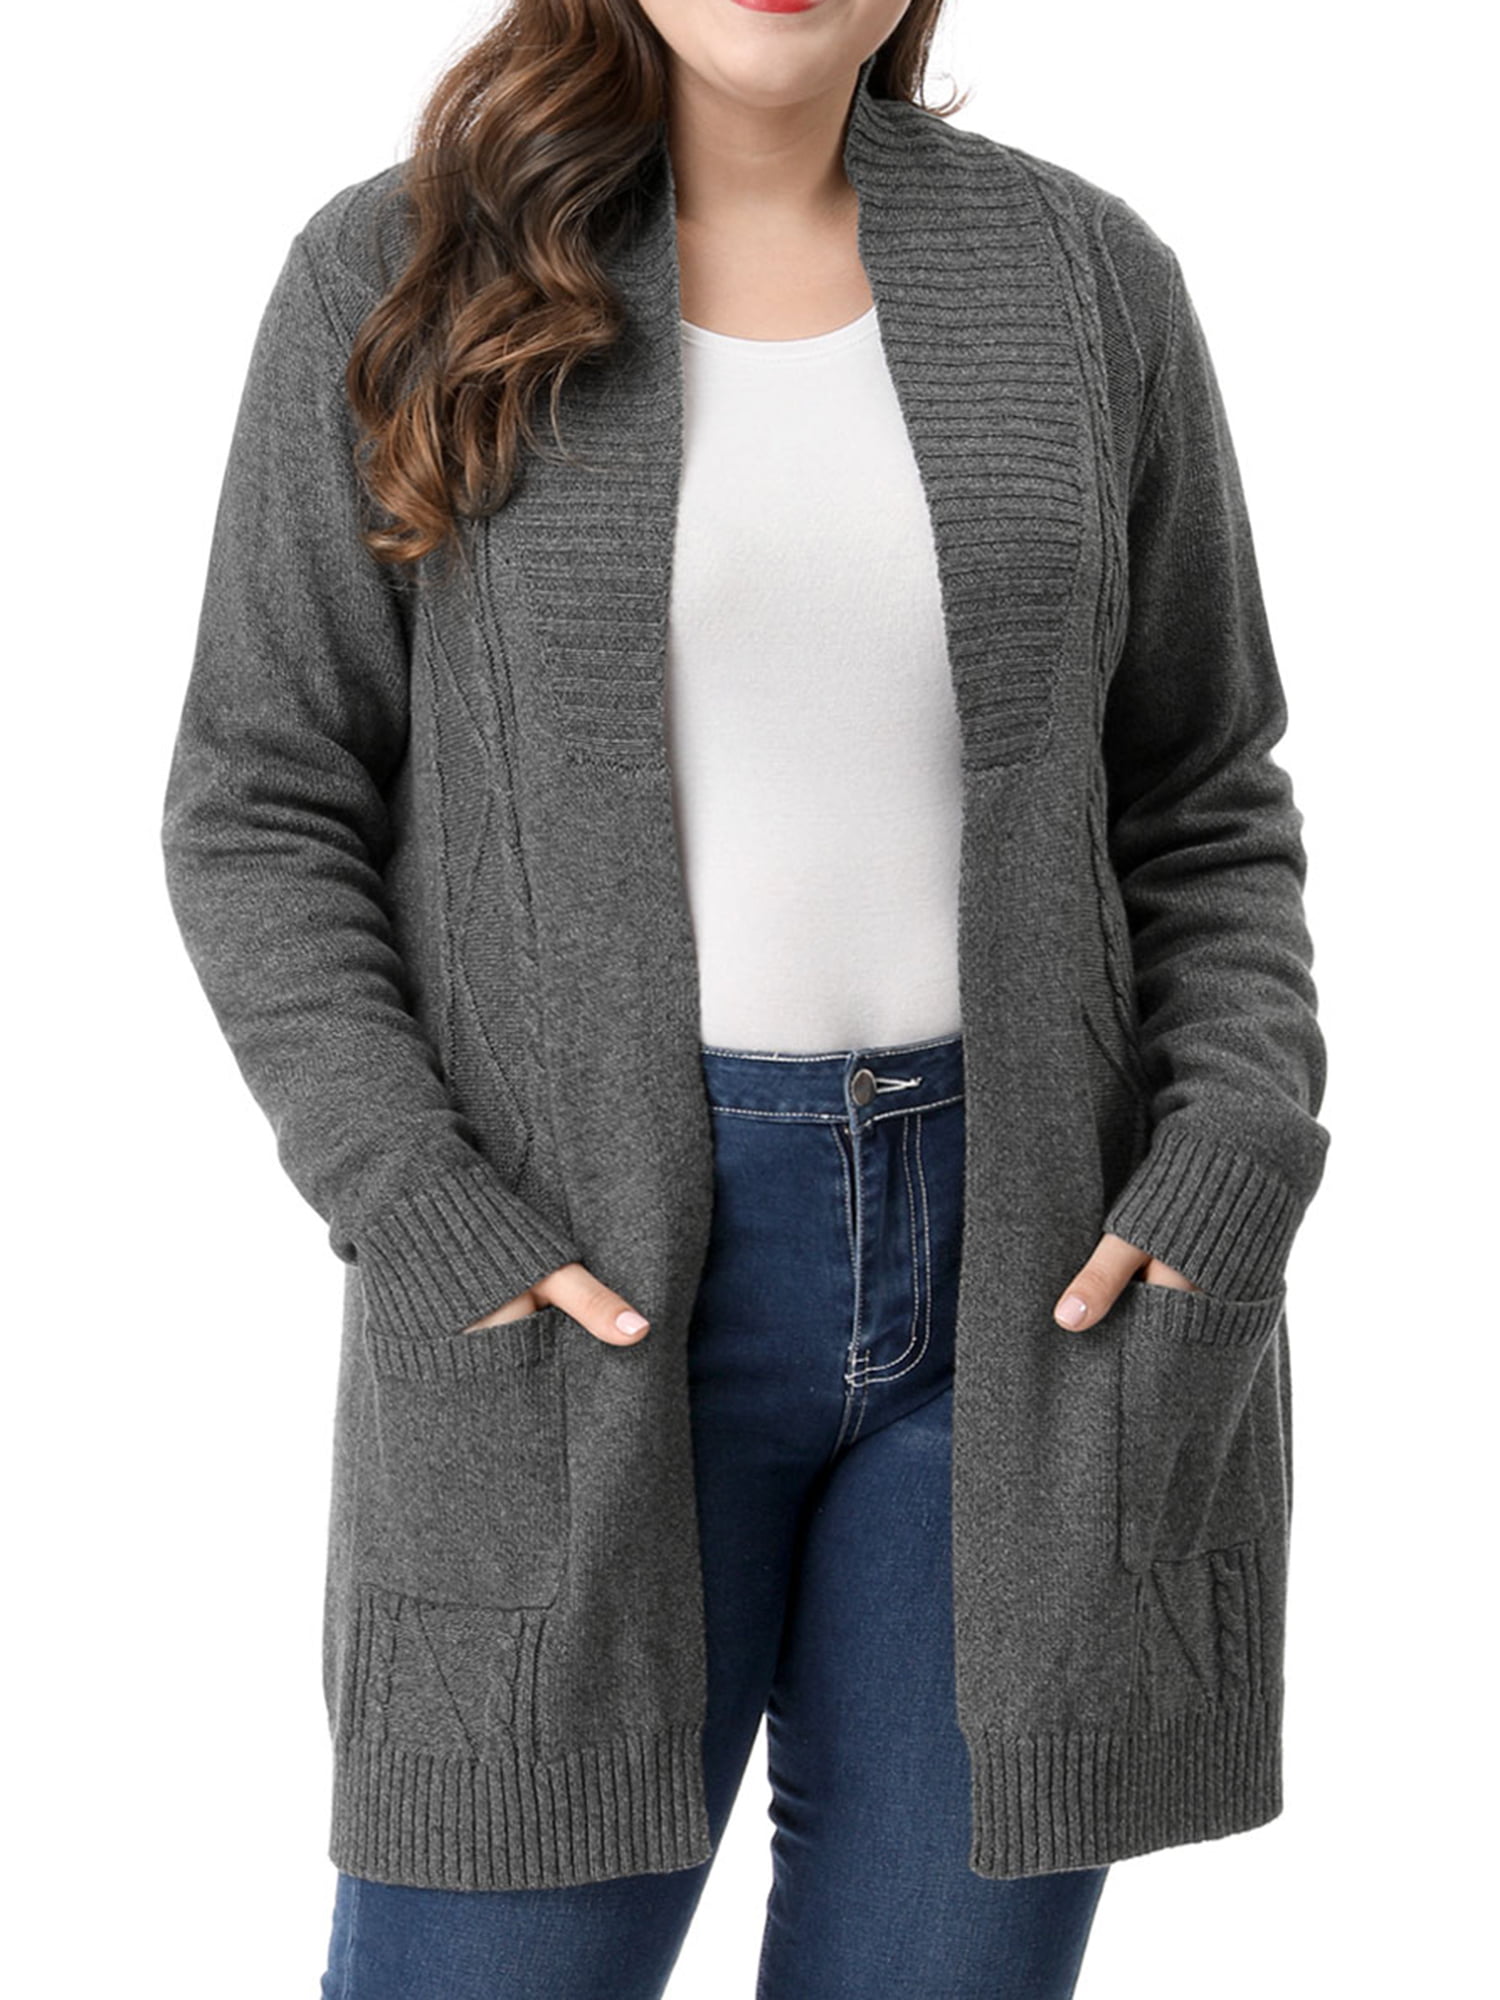 Agnes Orinda - Agnes Orinda Women's Plus Size Long Sleeves Sweater ...